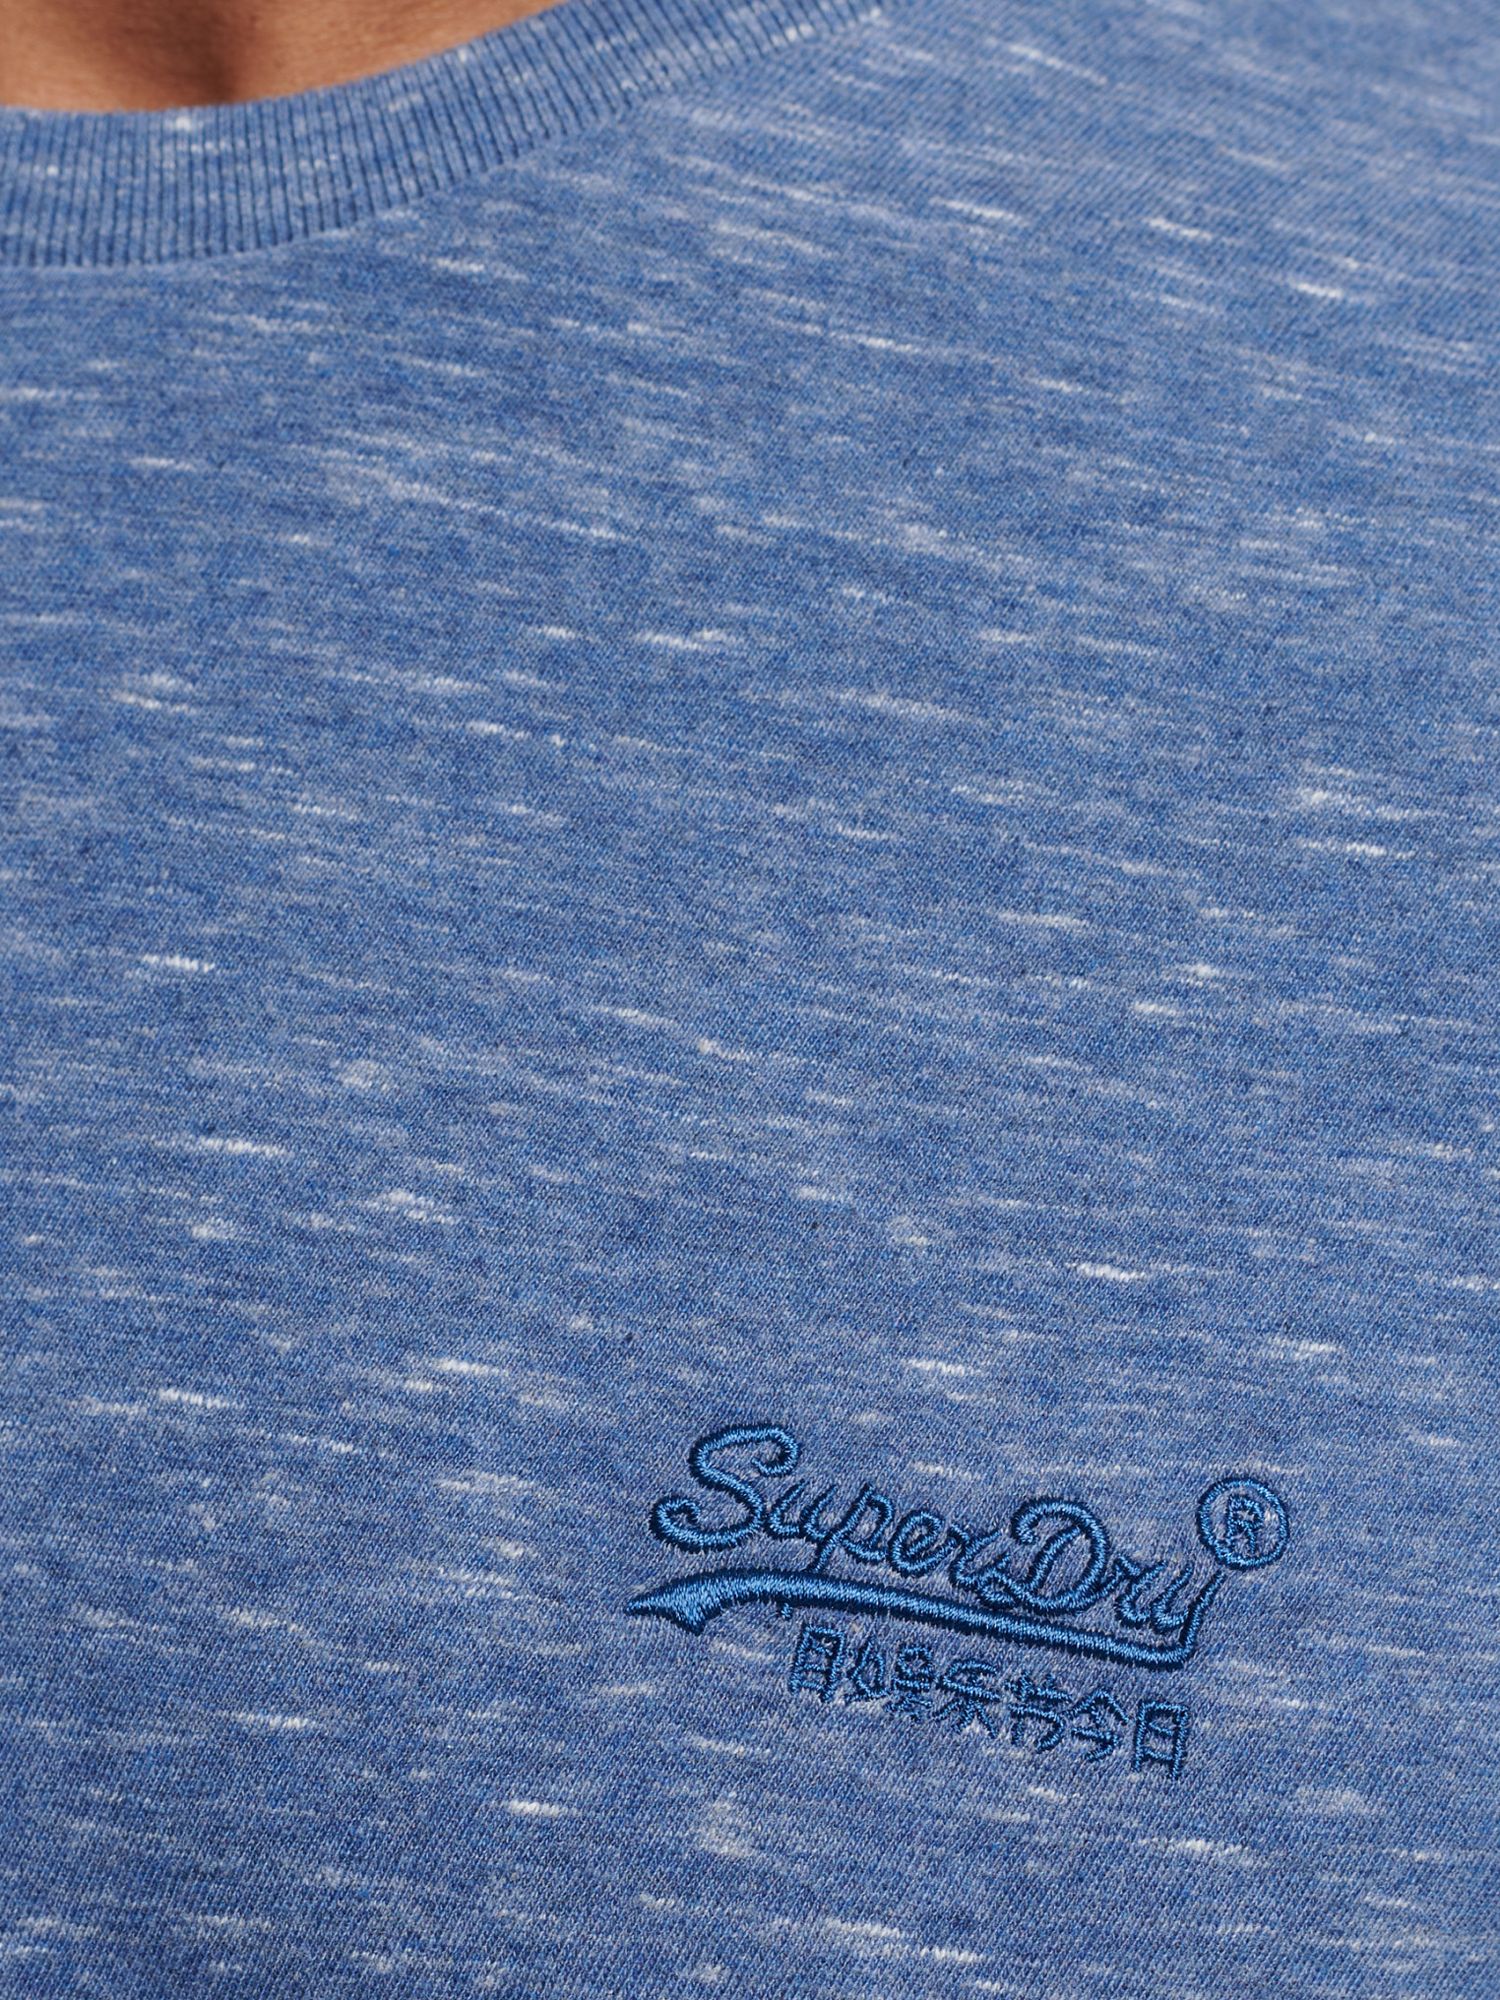 Buy Superdry Organic Cotton Vintage Logo Embroidered T-Shirt Online at johnlewis.com